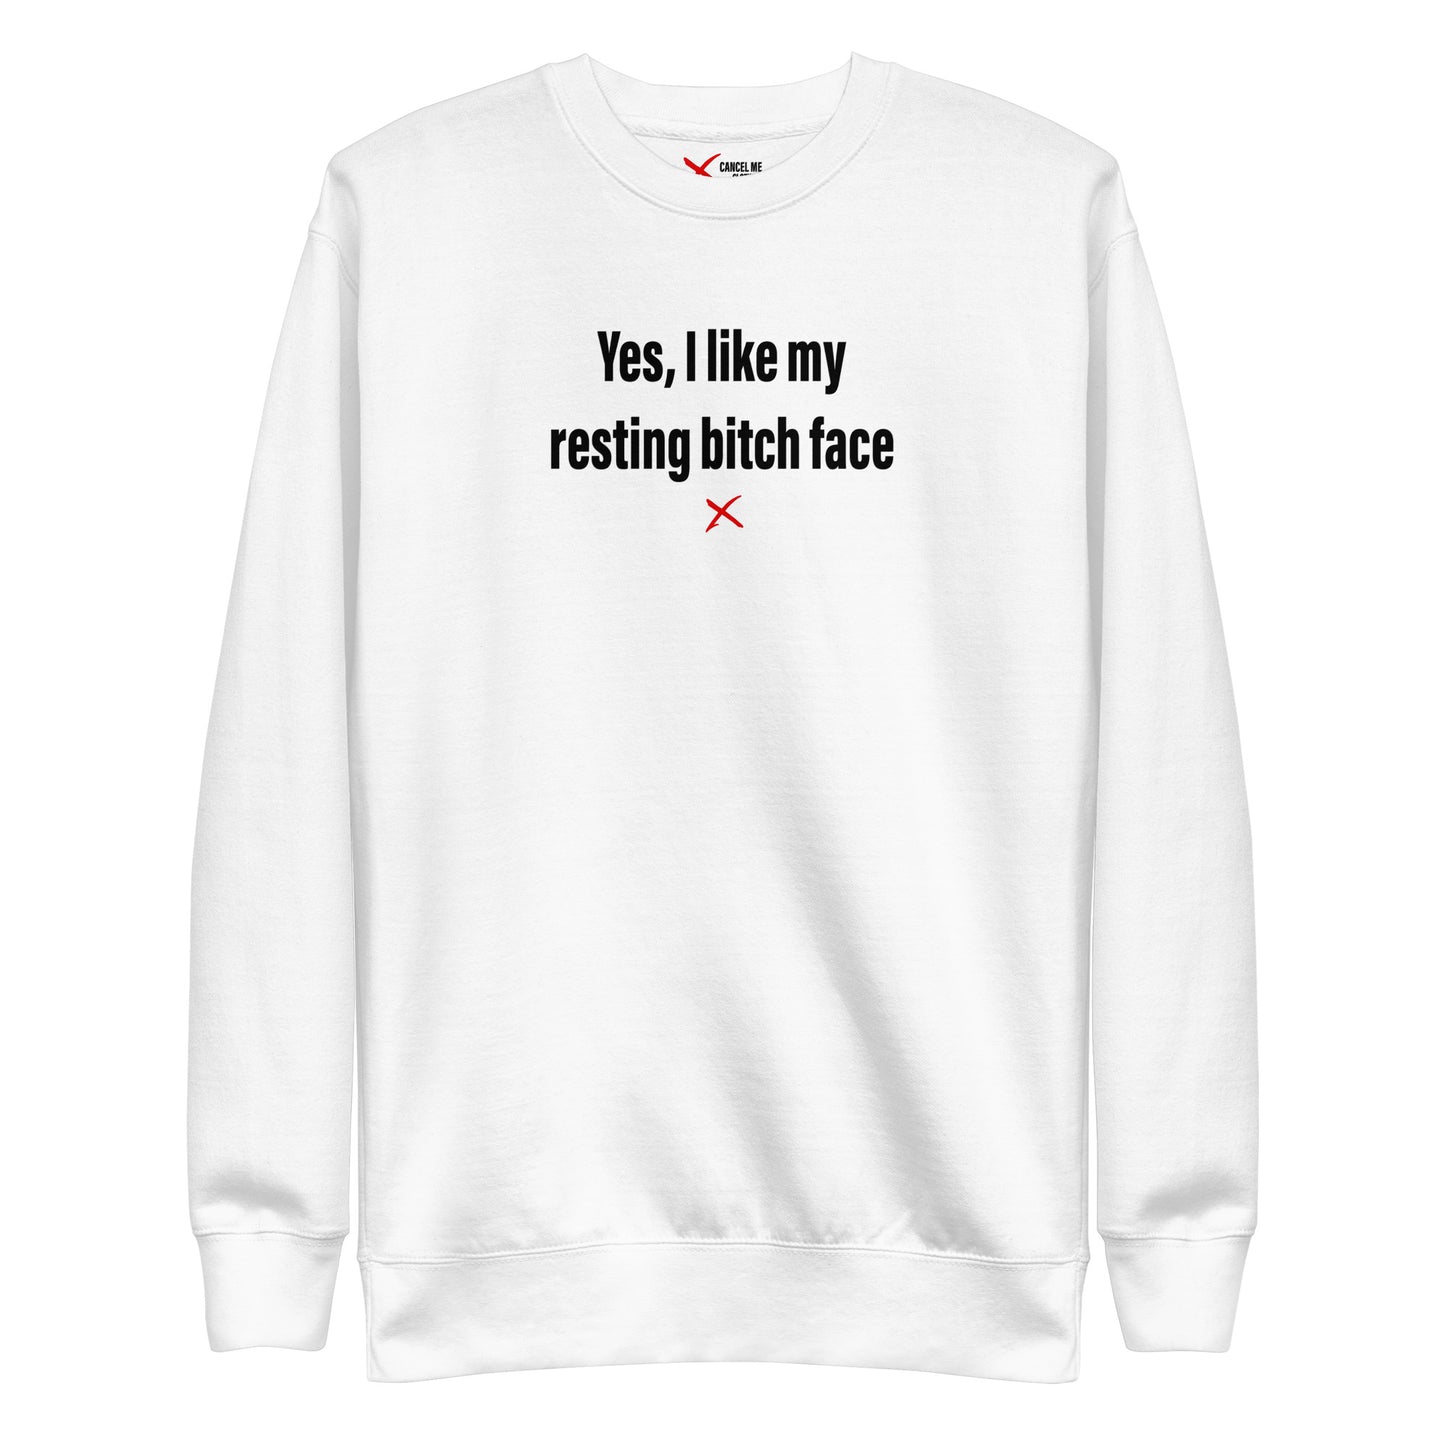 Yes, I like my resting bitch face - Sweatshirt